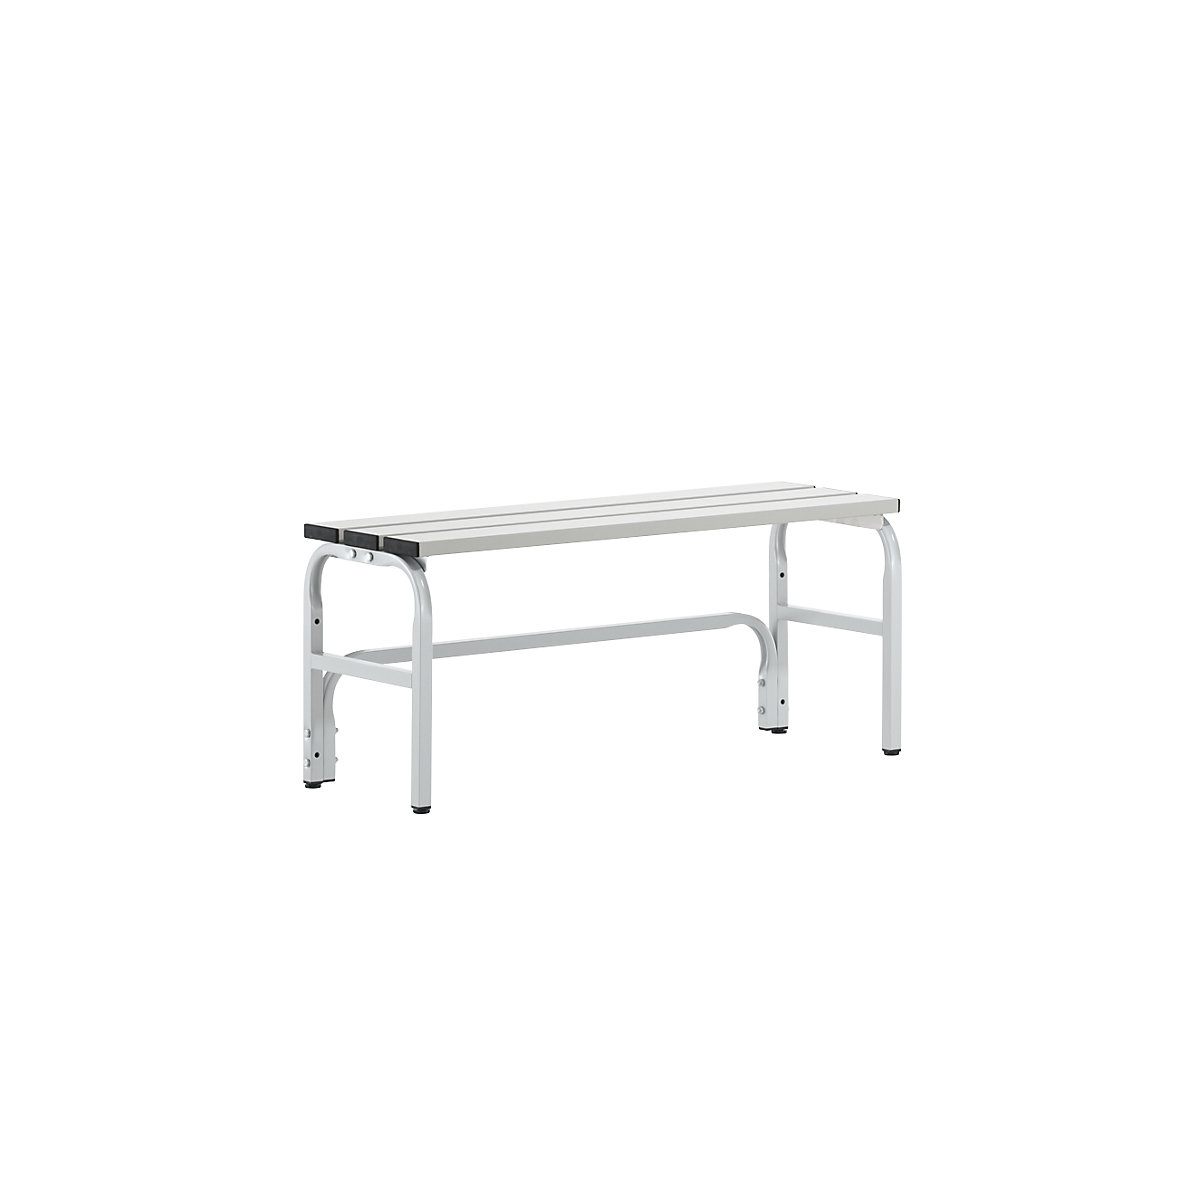 Changing room bench with aluminium slats - Sypro